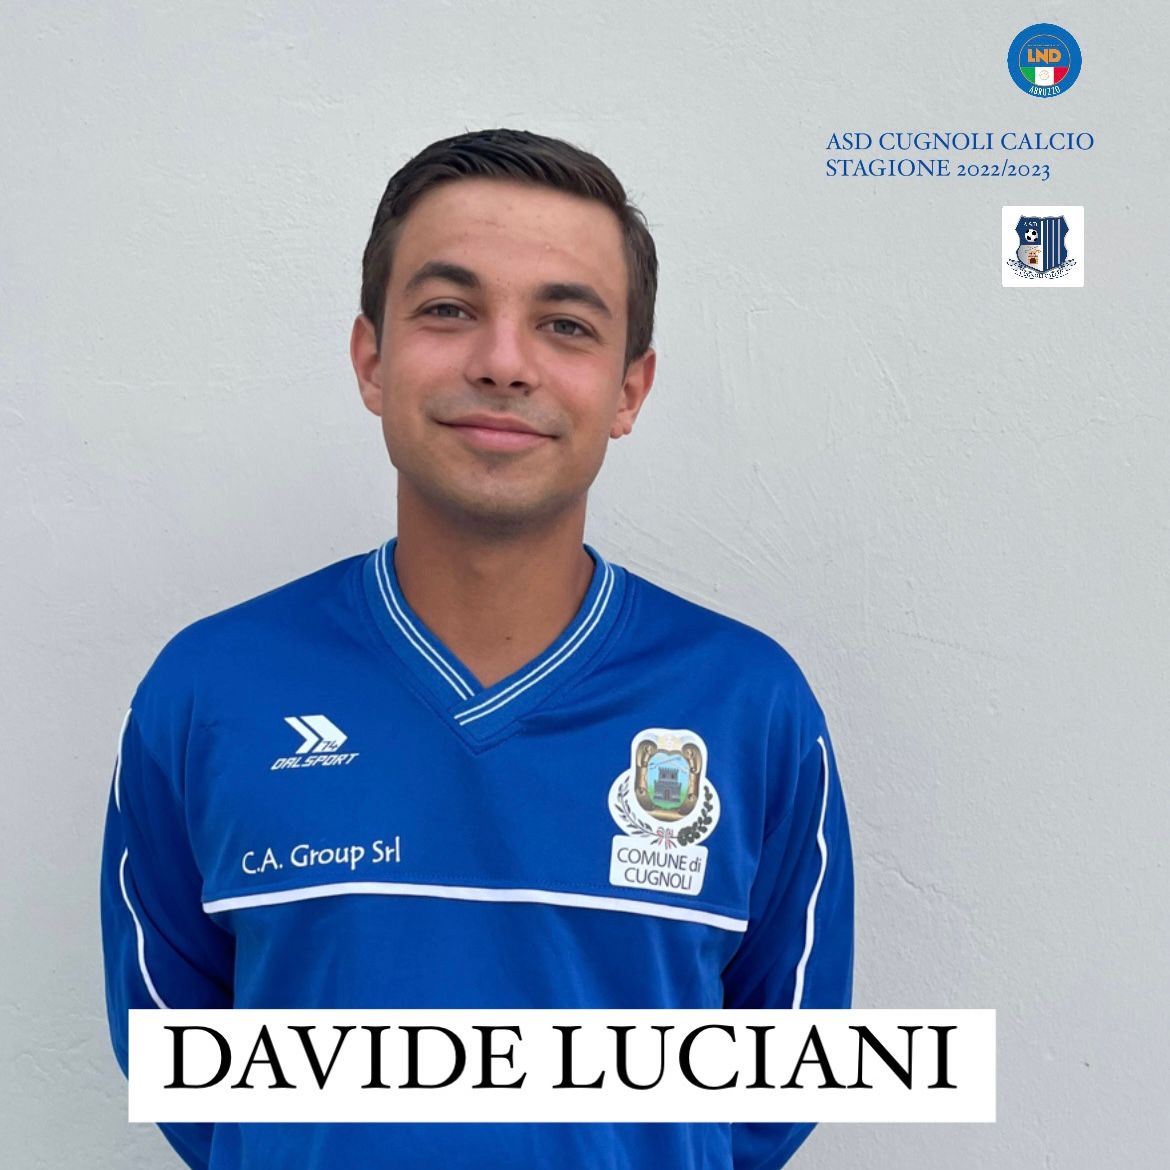 Davide Luciani